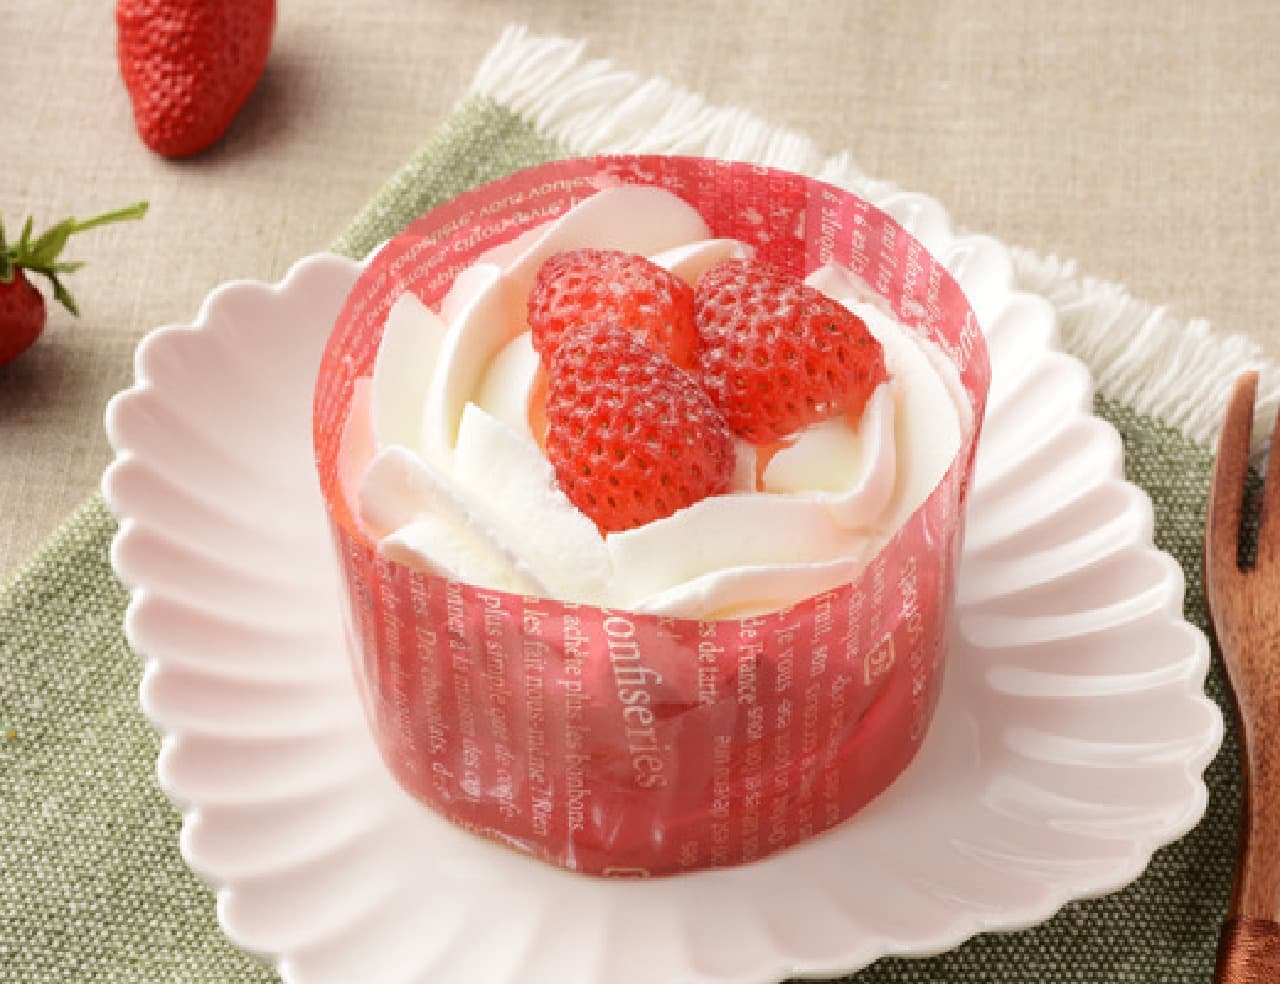 Lawson "Strawberry Cake